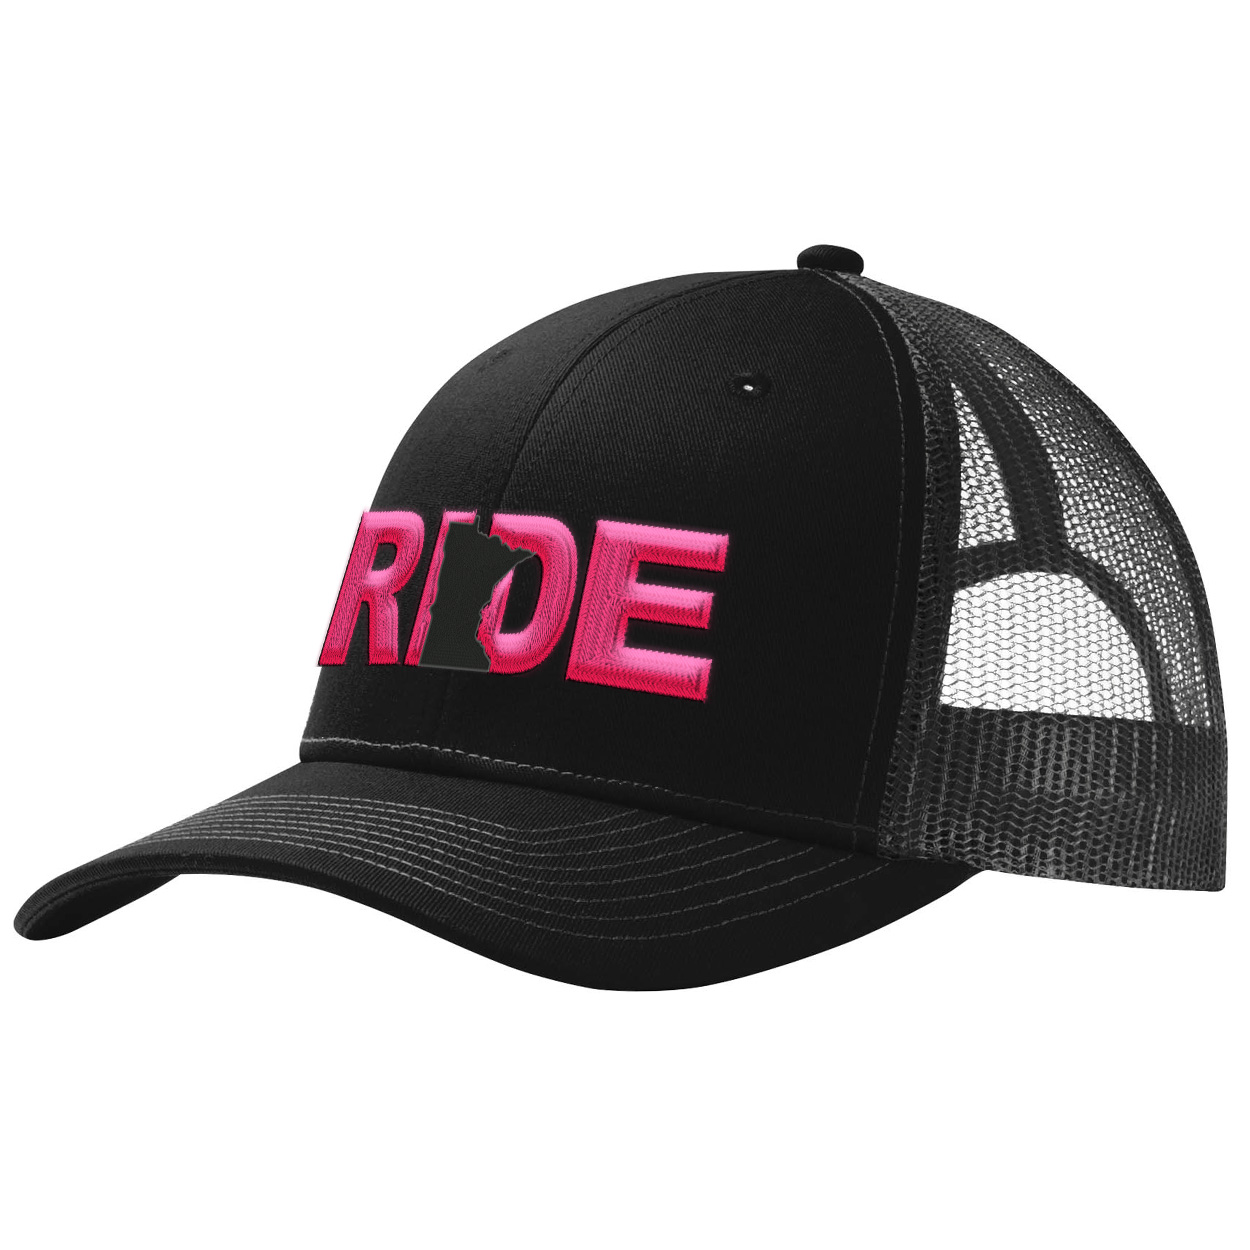 Ride Minnesota Classic Pro 3D Puff Embroidered Snapback Trucker Hat Black/Pink